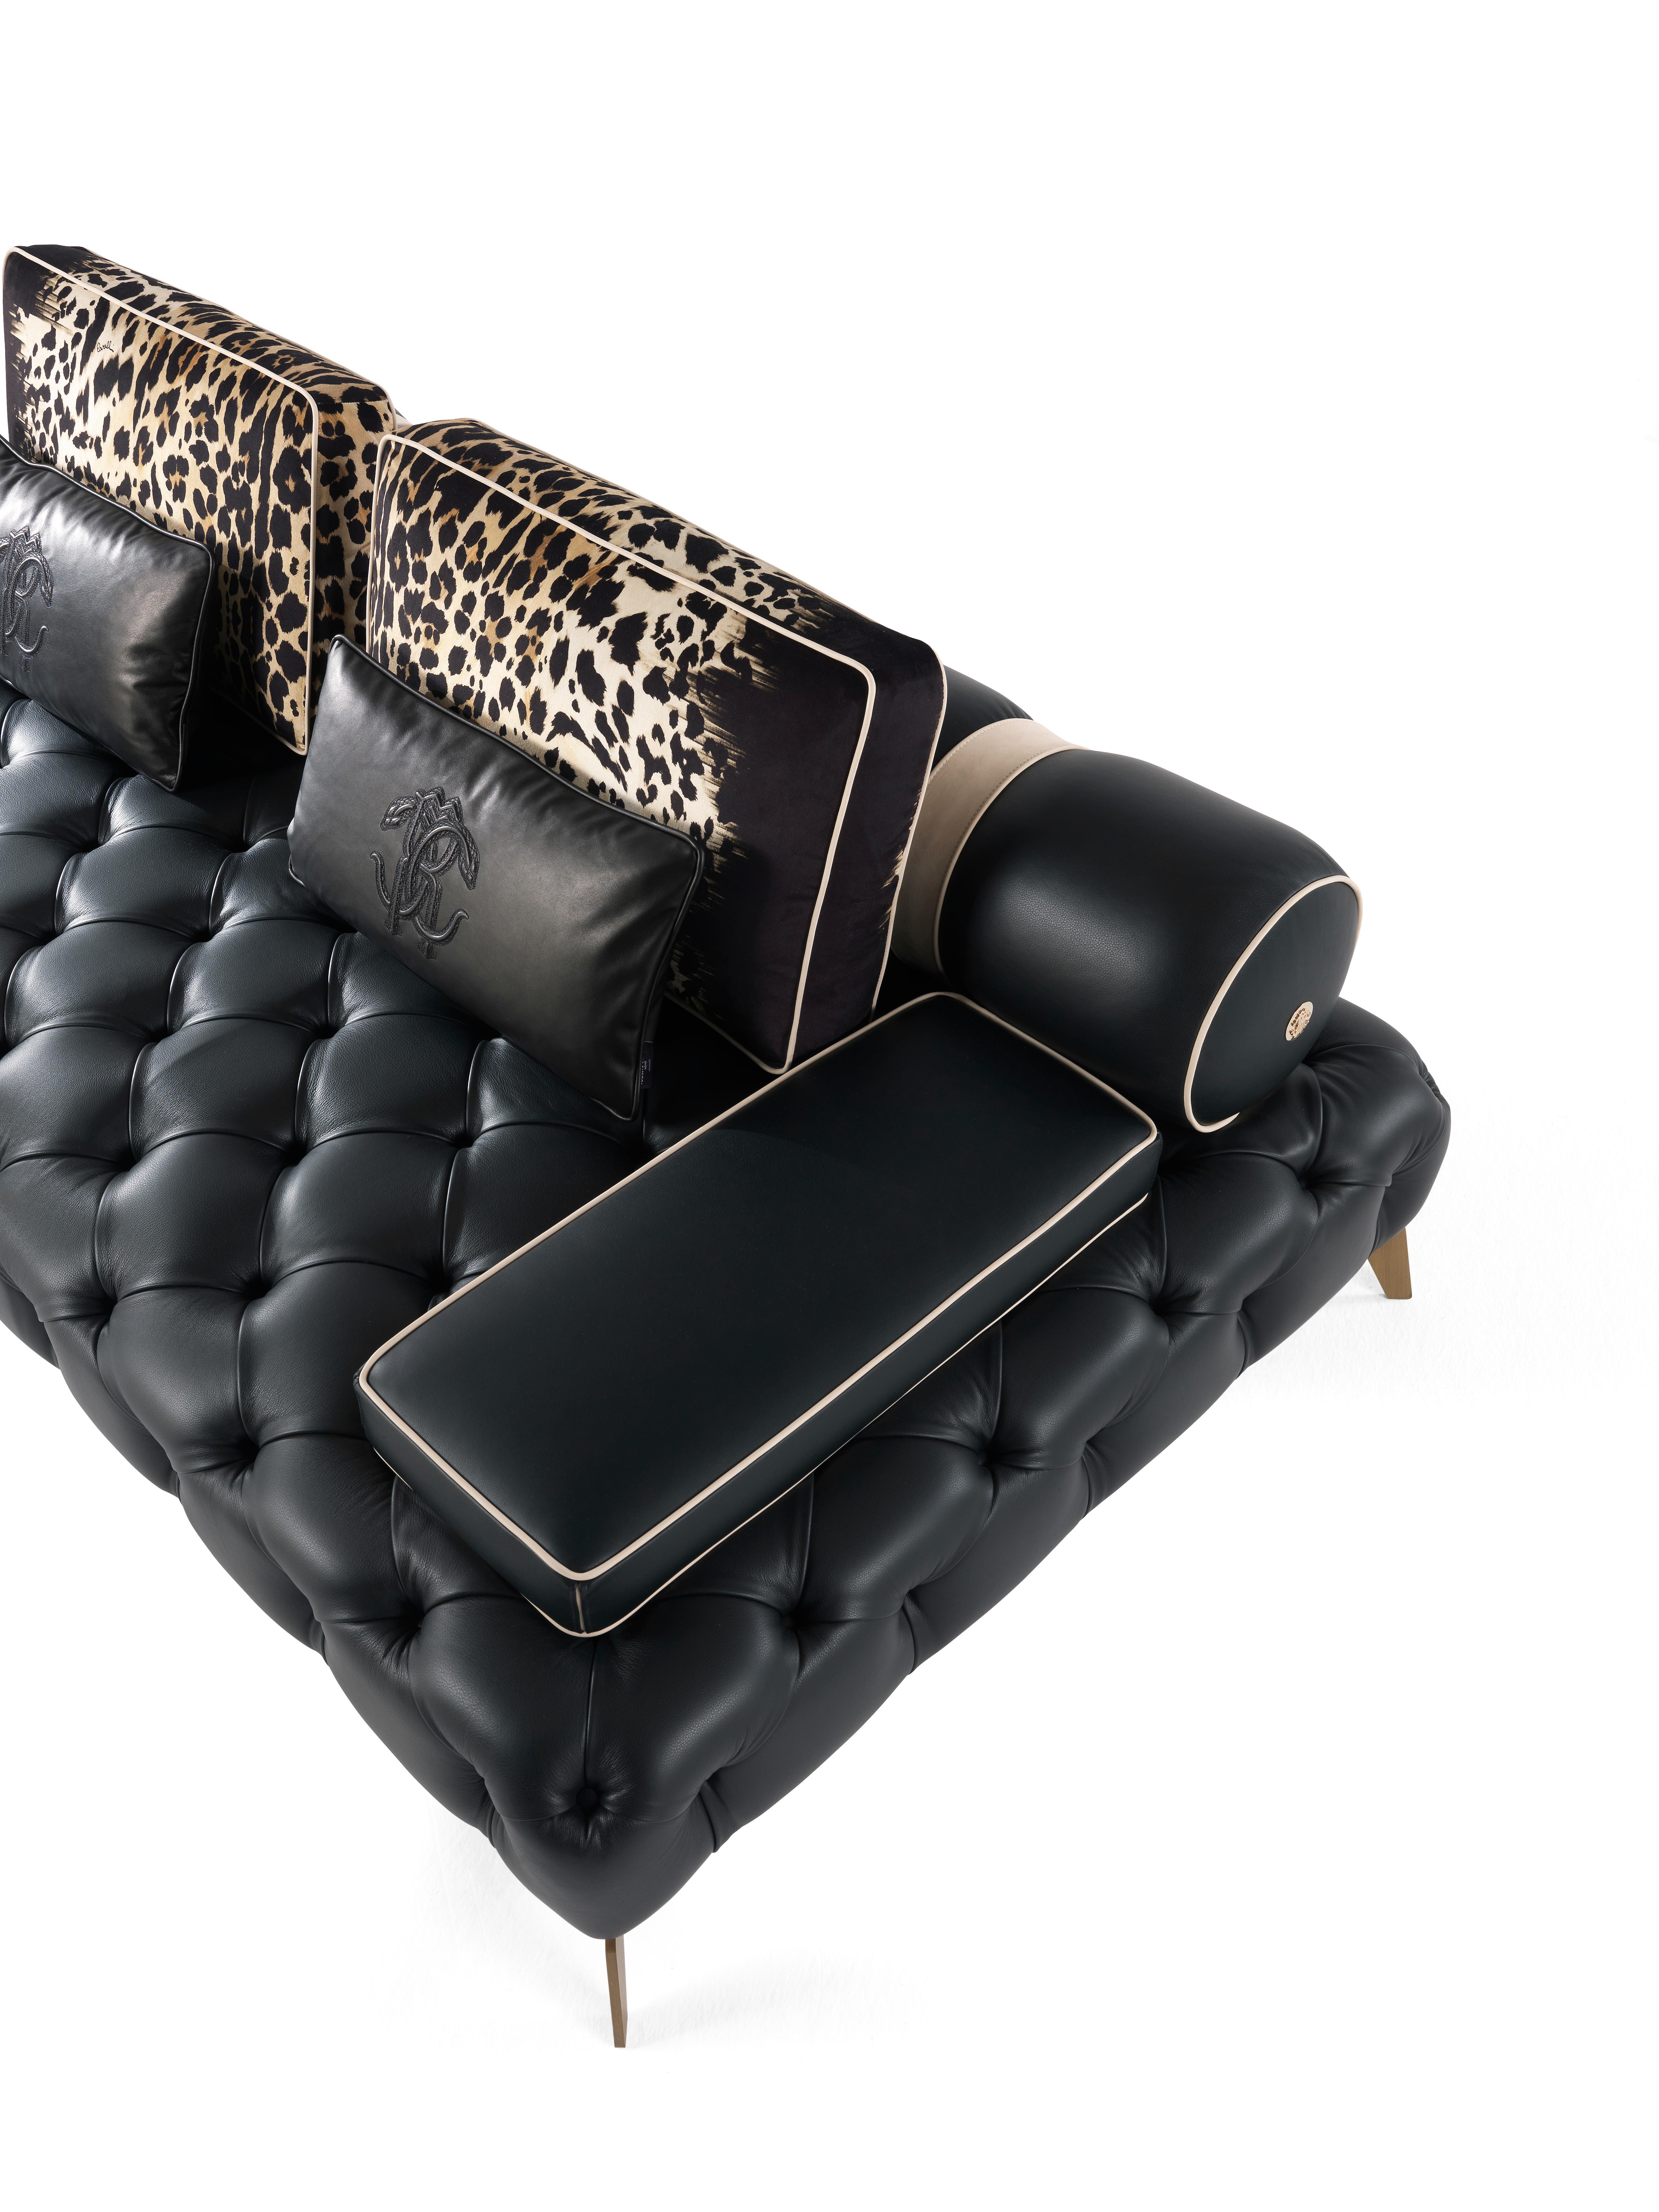 Italian 21st Century Darlington Sofa in Black Leather by Roberto Cavalli Home Interiors For Sale